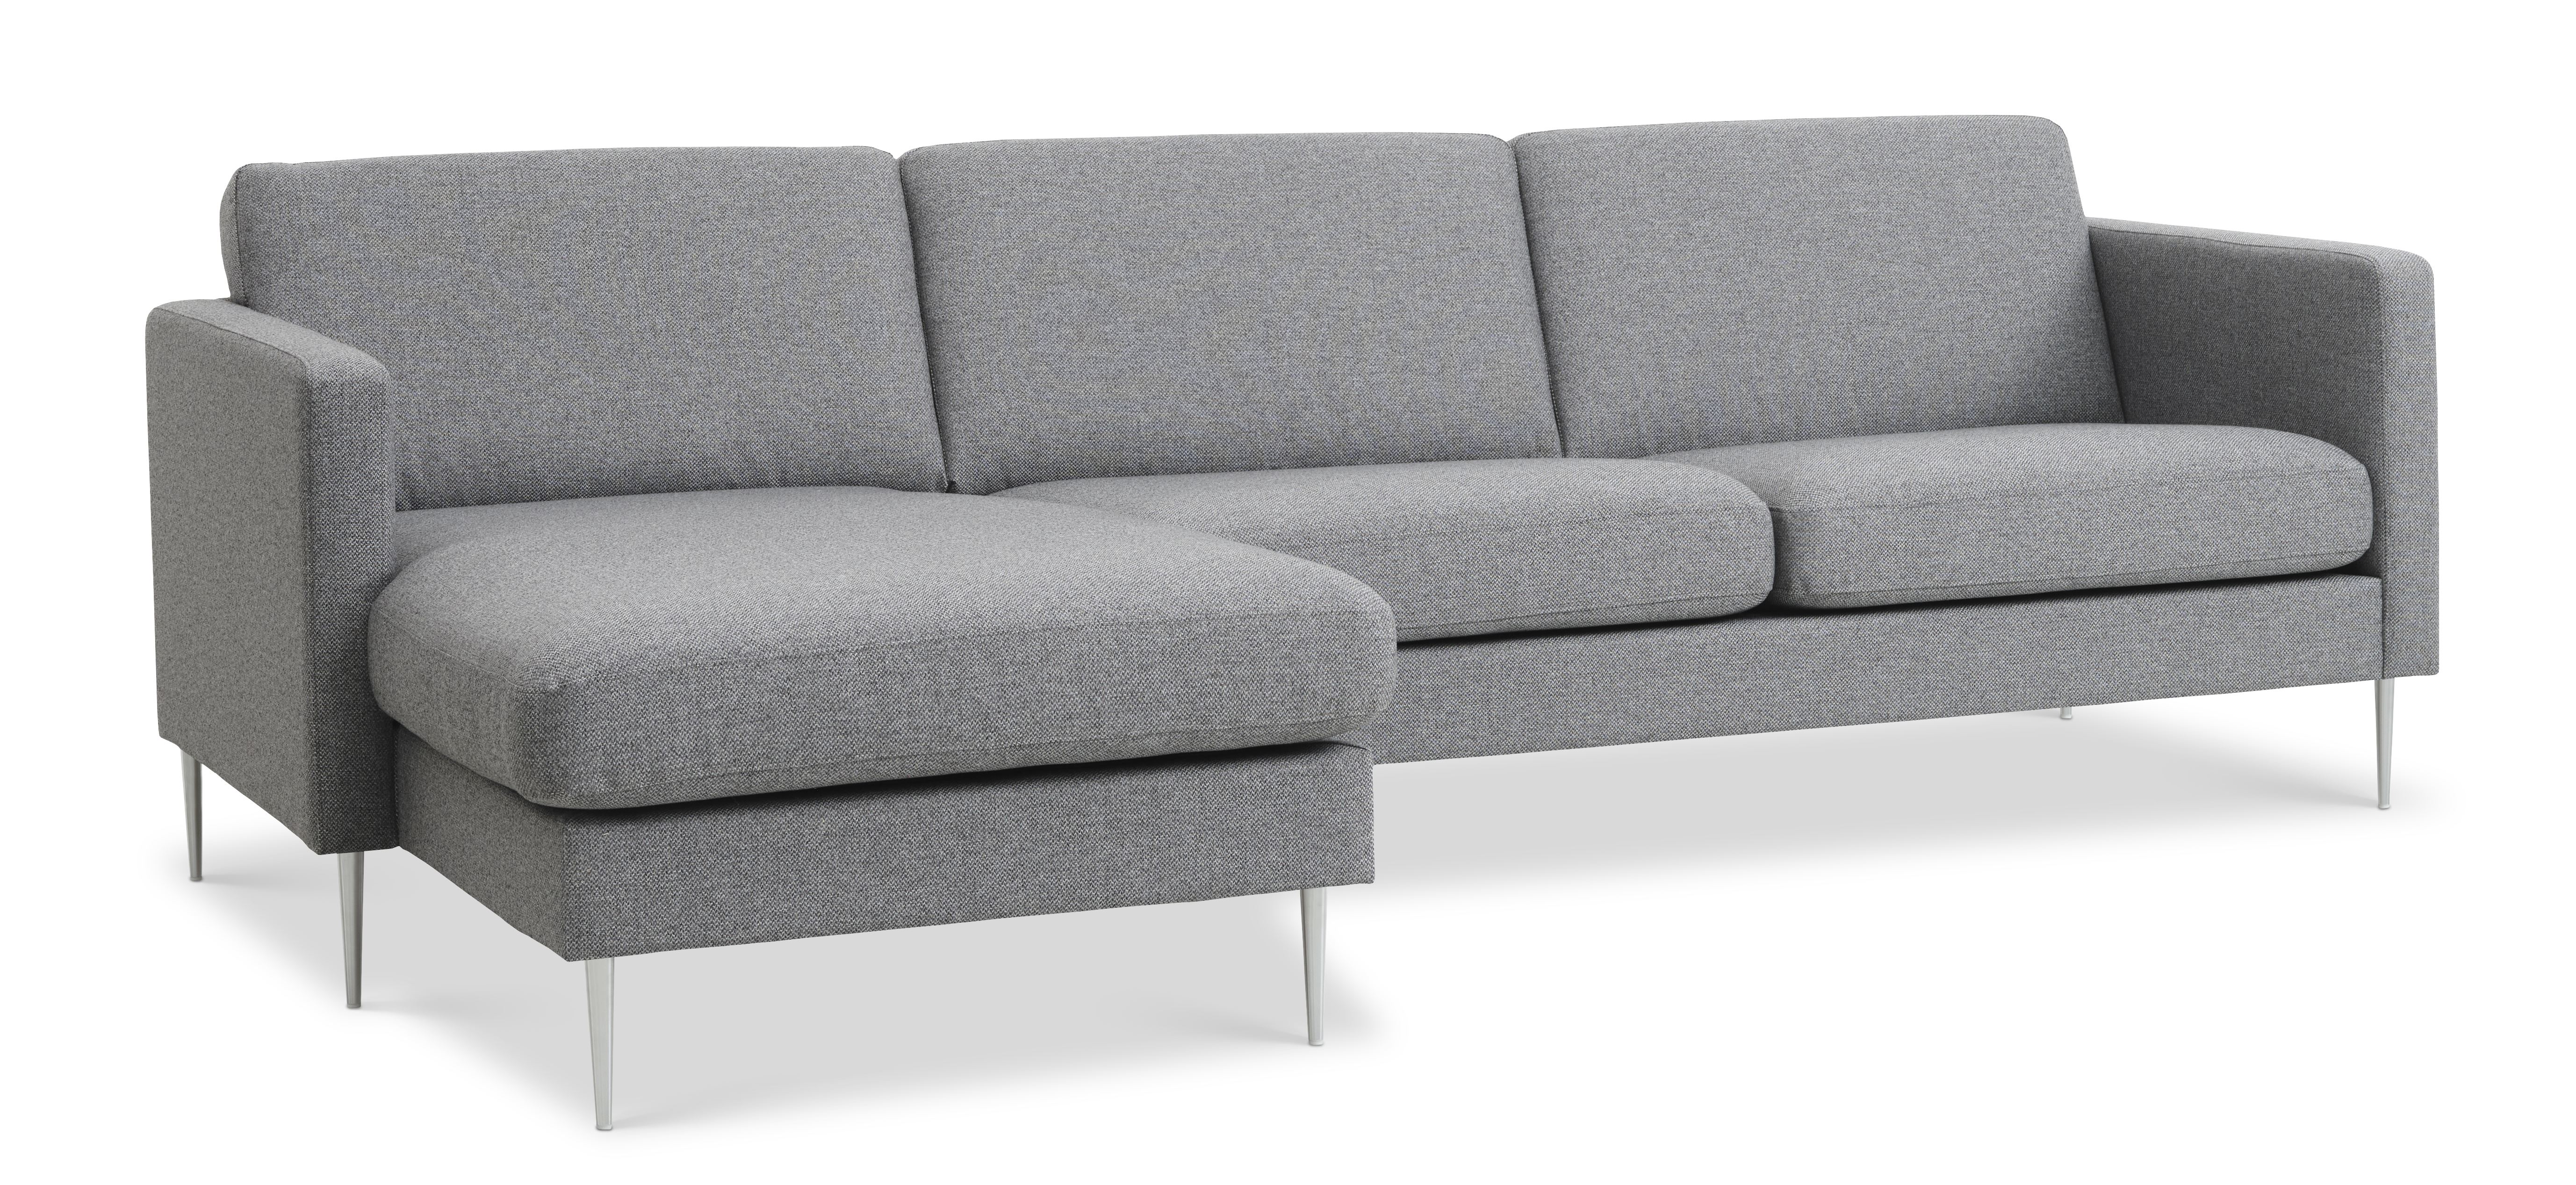 Ask sæt 51 3D sofa, m. chaiselong - lys granitgrå polyester stof og børstet aluminium